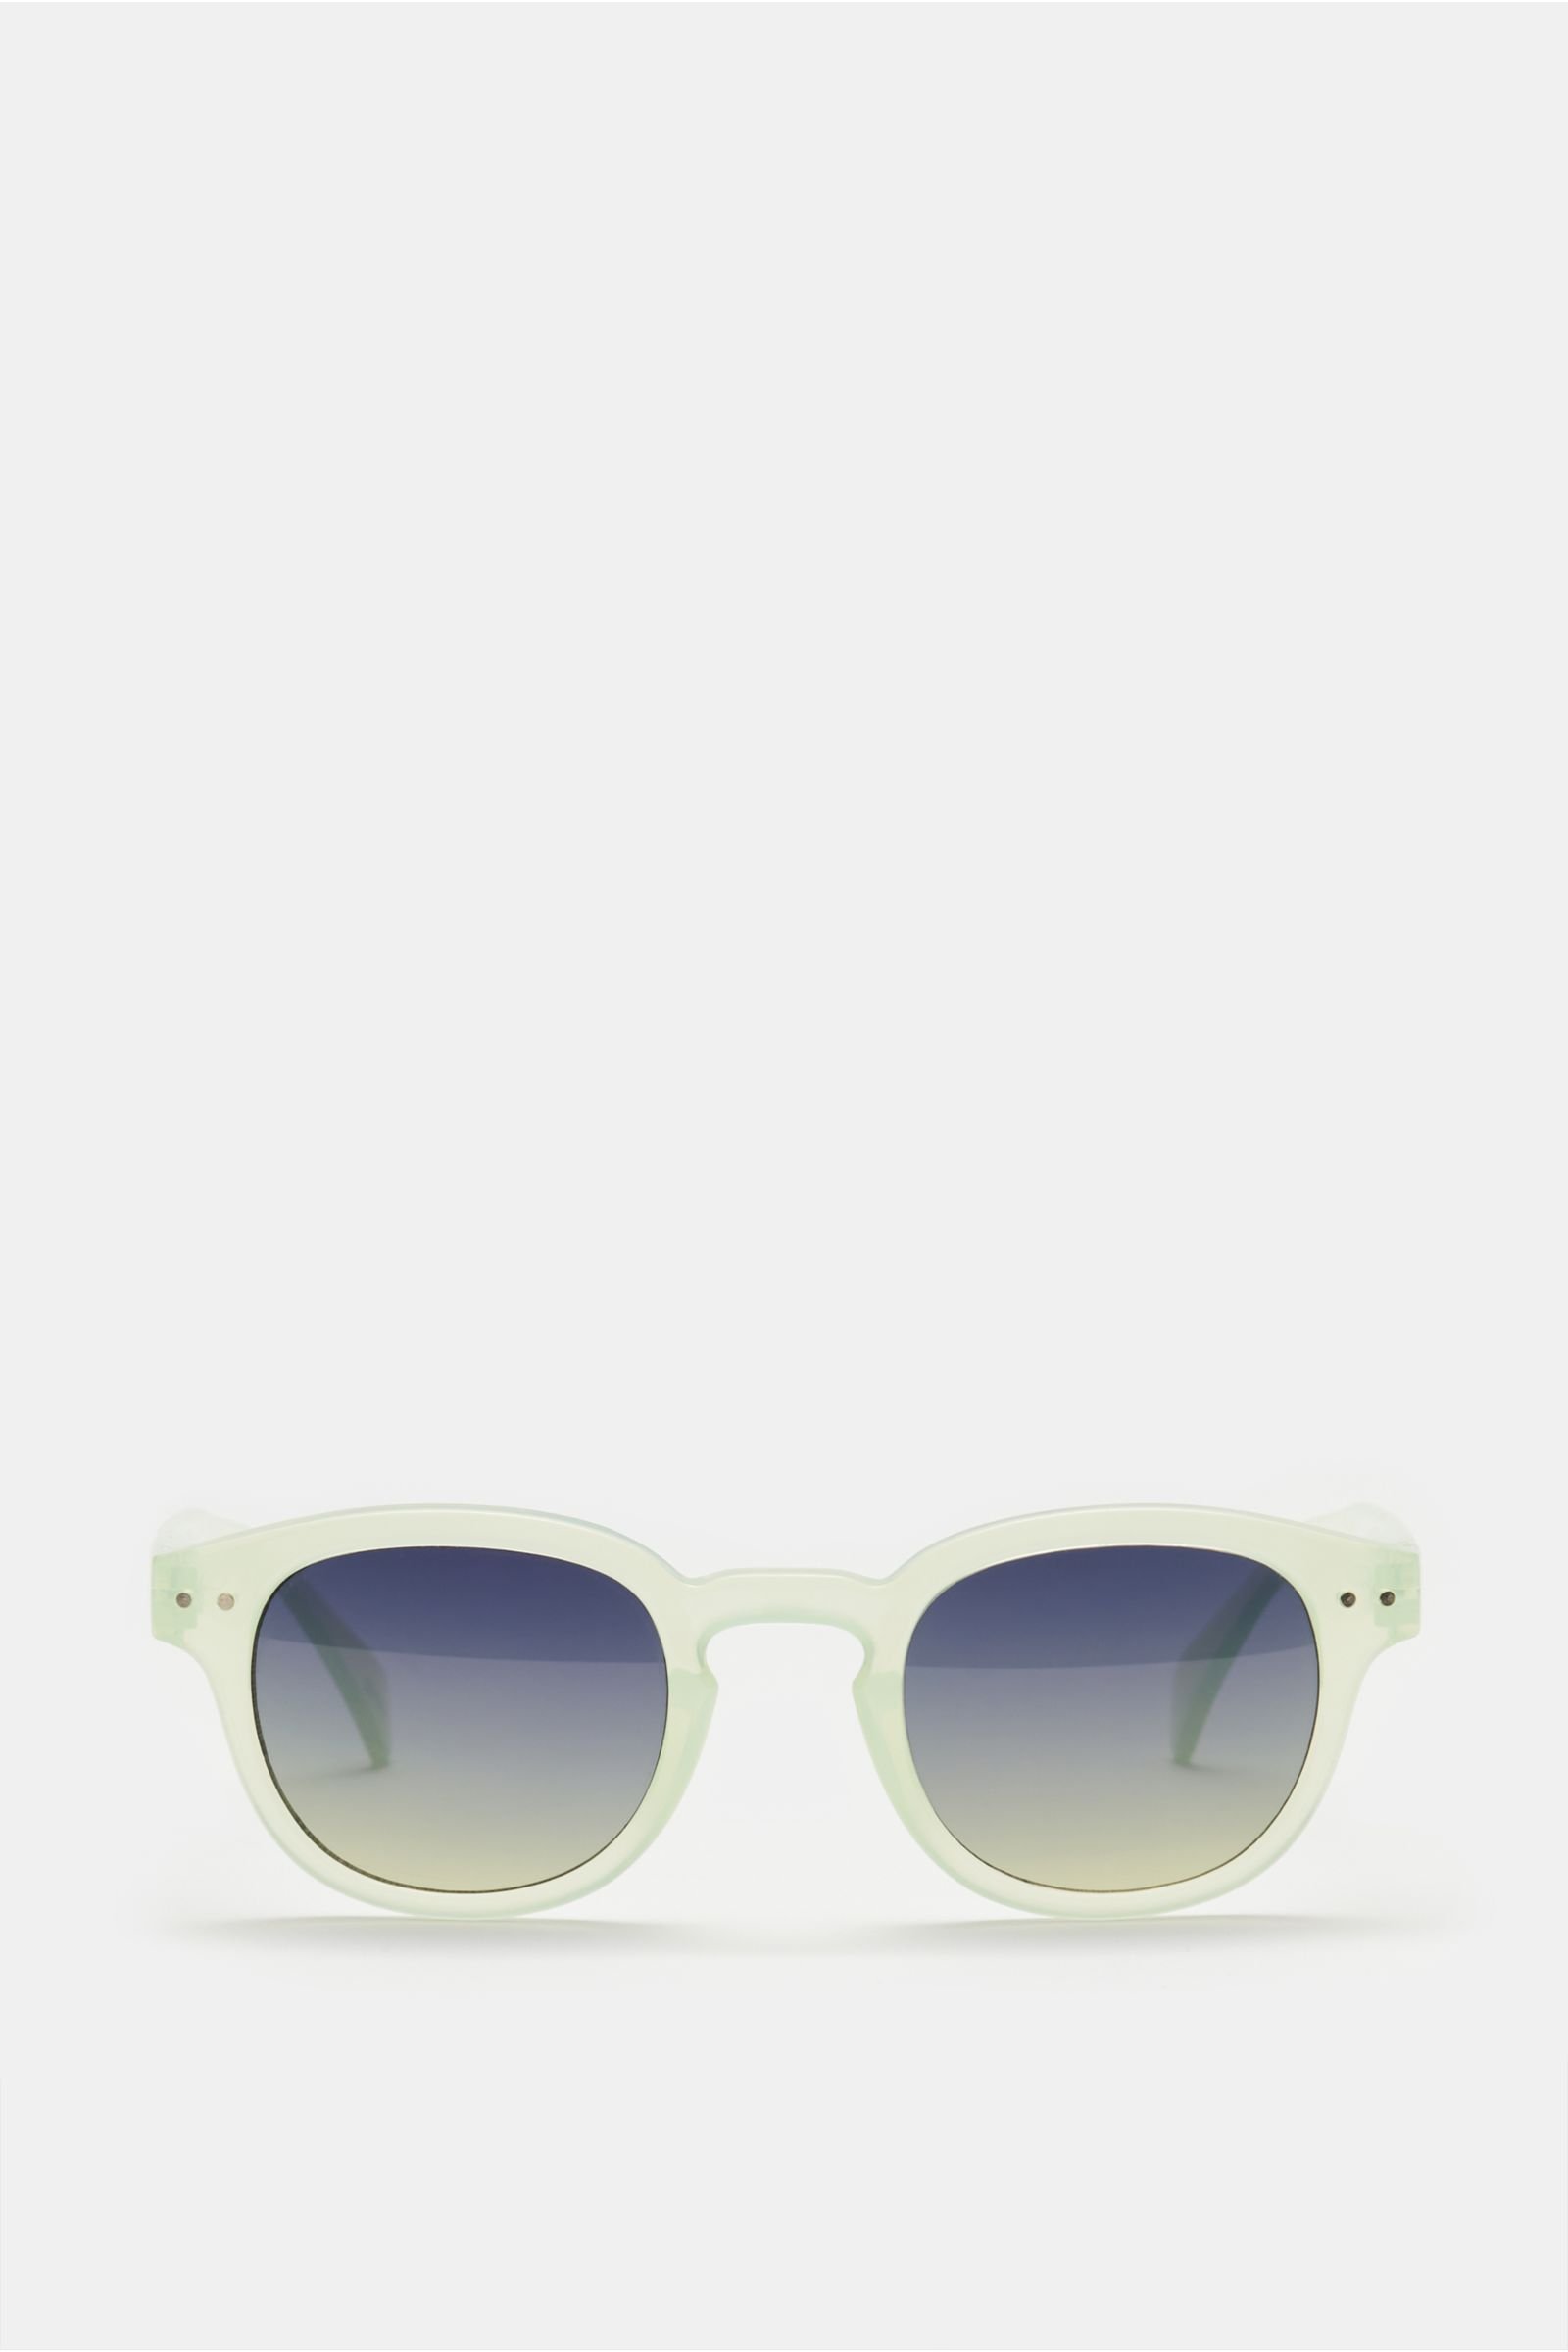 Sunglasses '#C Sun' light green/grey